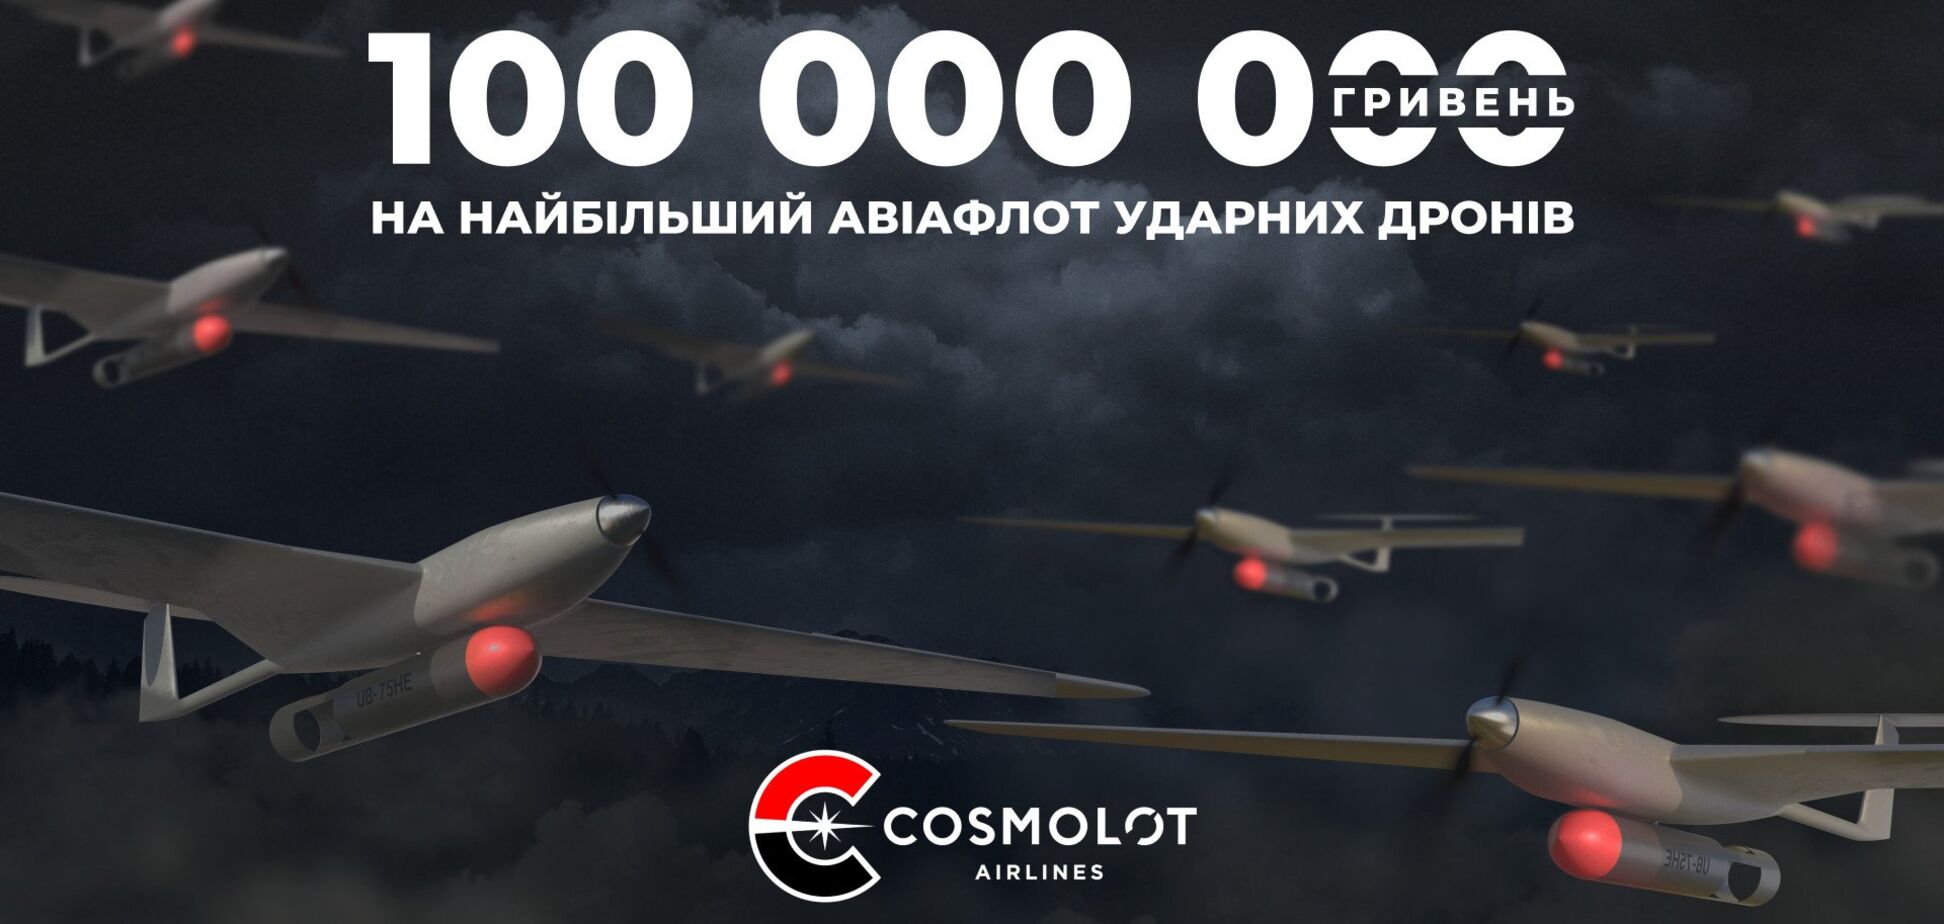 Cosmolot Airlines: 100 млн грн на крупнейший авиафлот ударных дронов